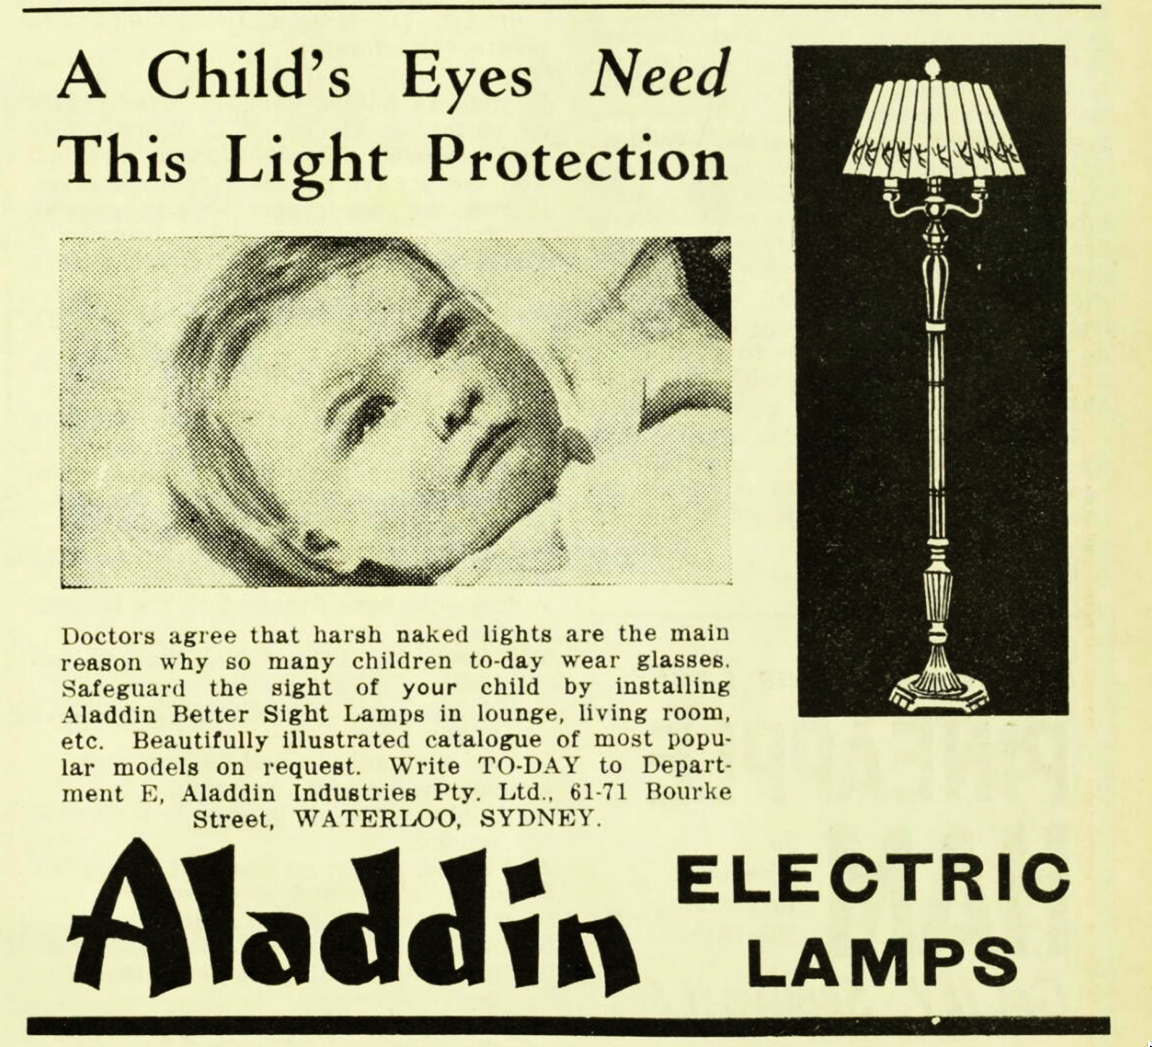 Aladdin Australia electric lamps